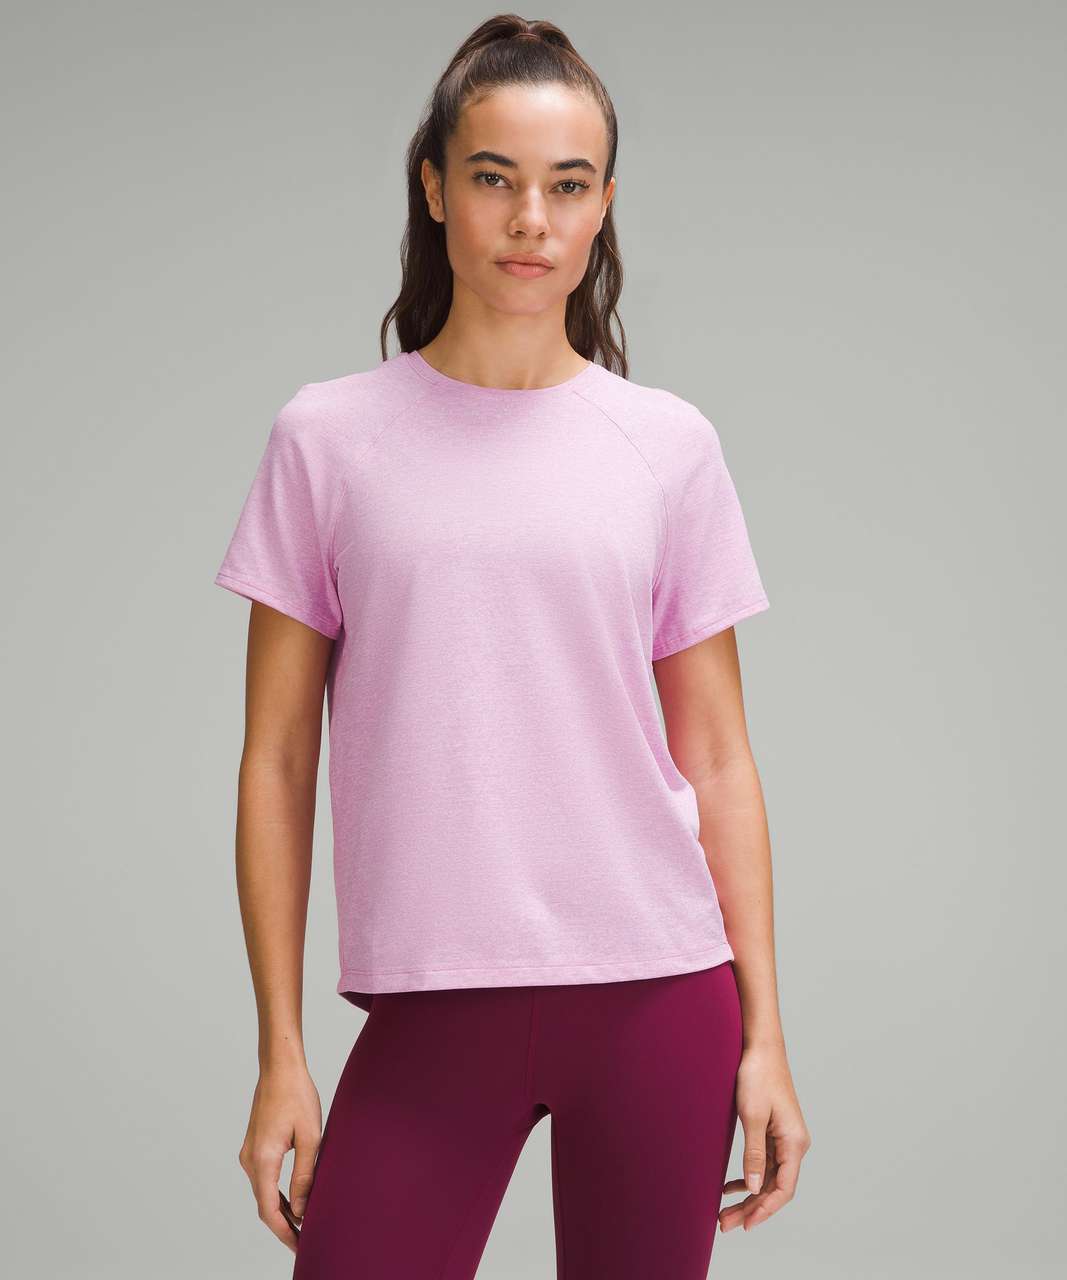 Lululemon License to Train Classic-Fit T-Shirt - Heathered Dahlia Mauve